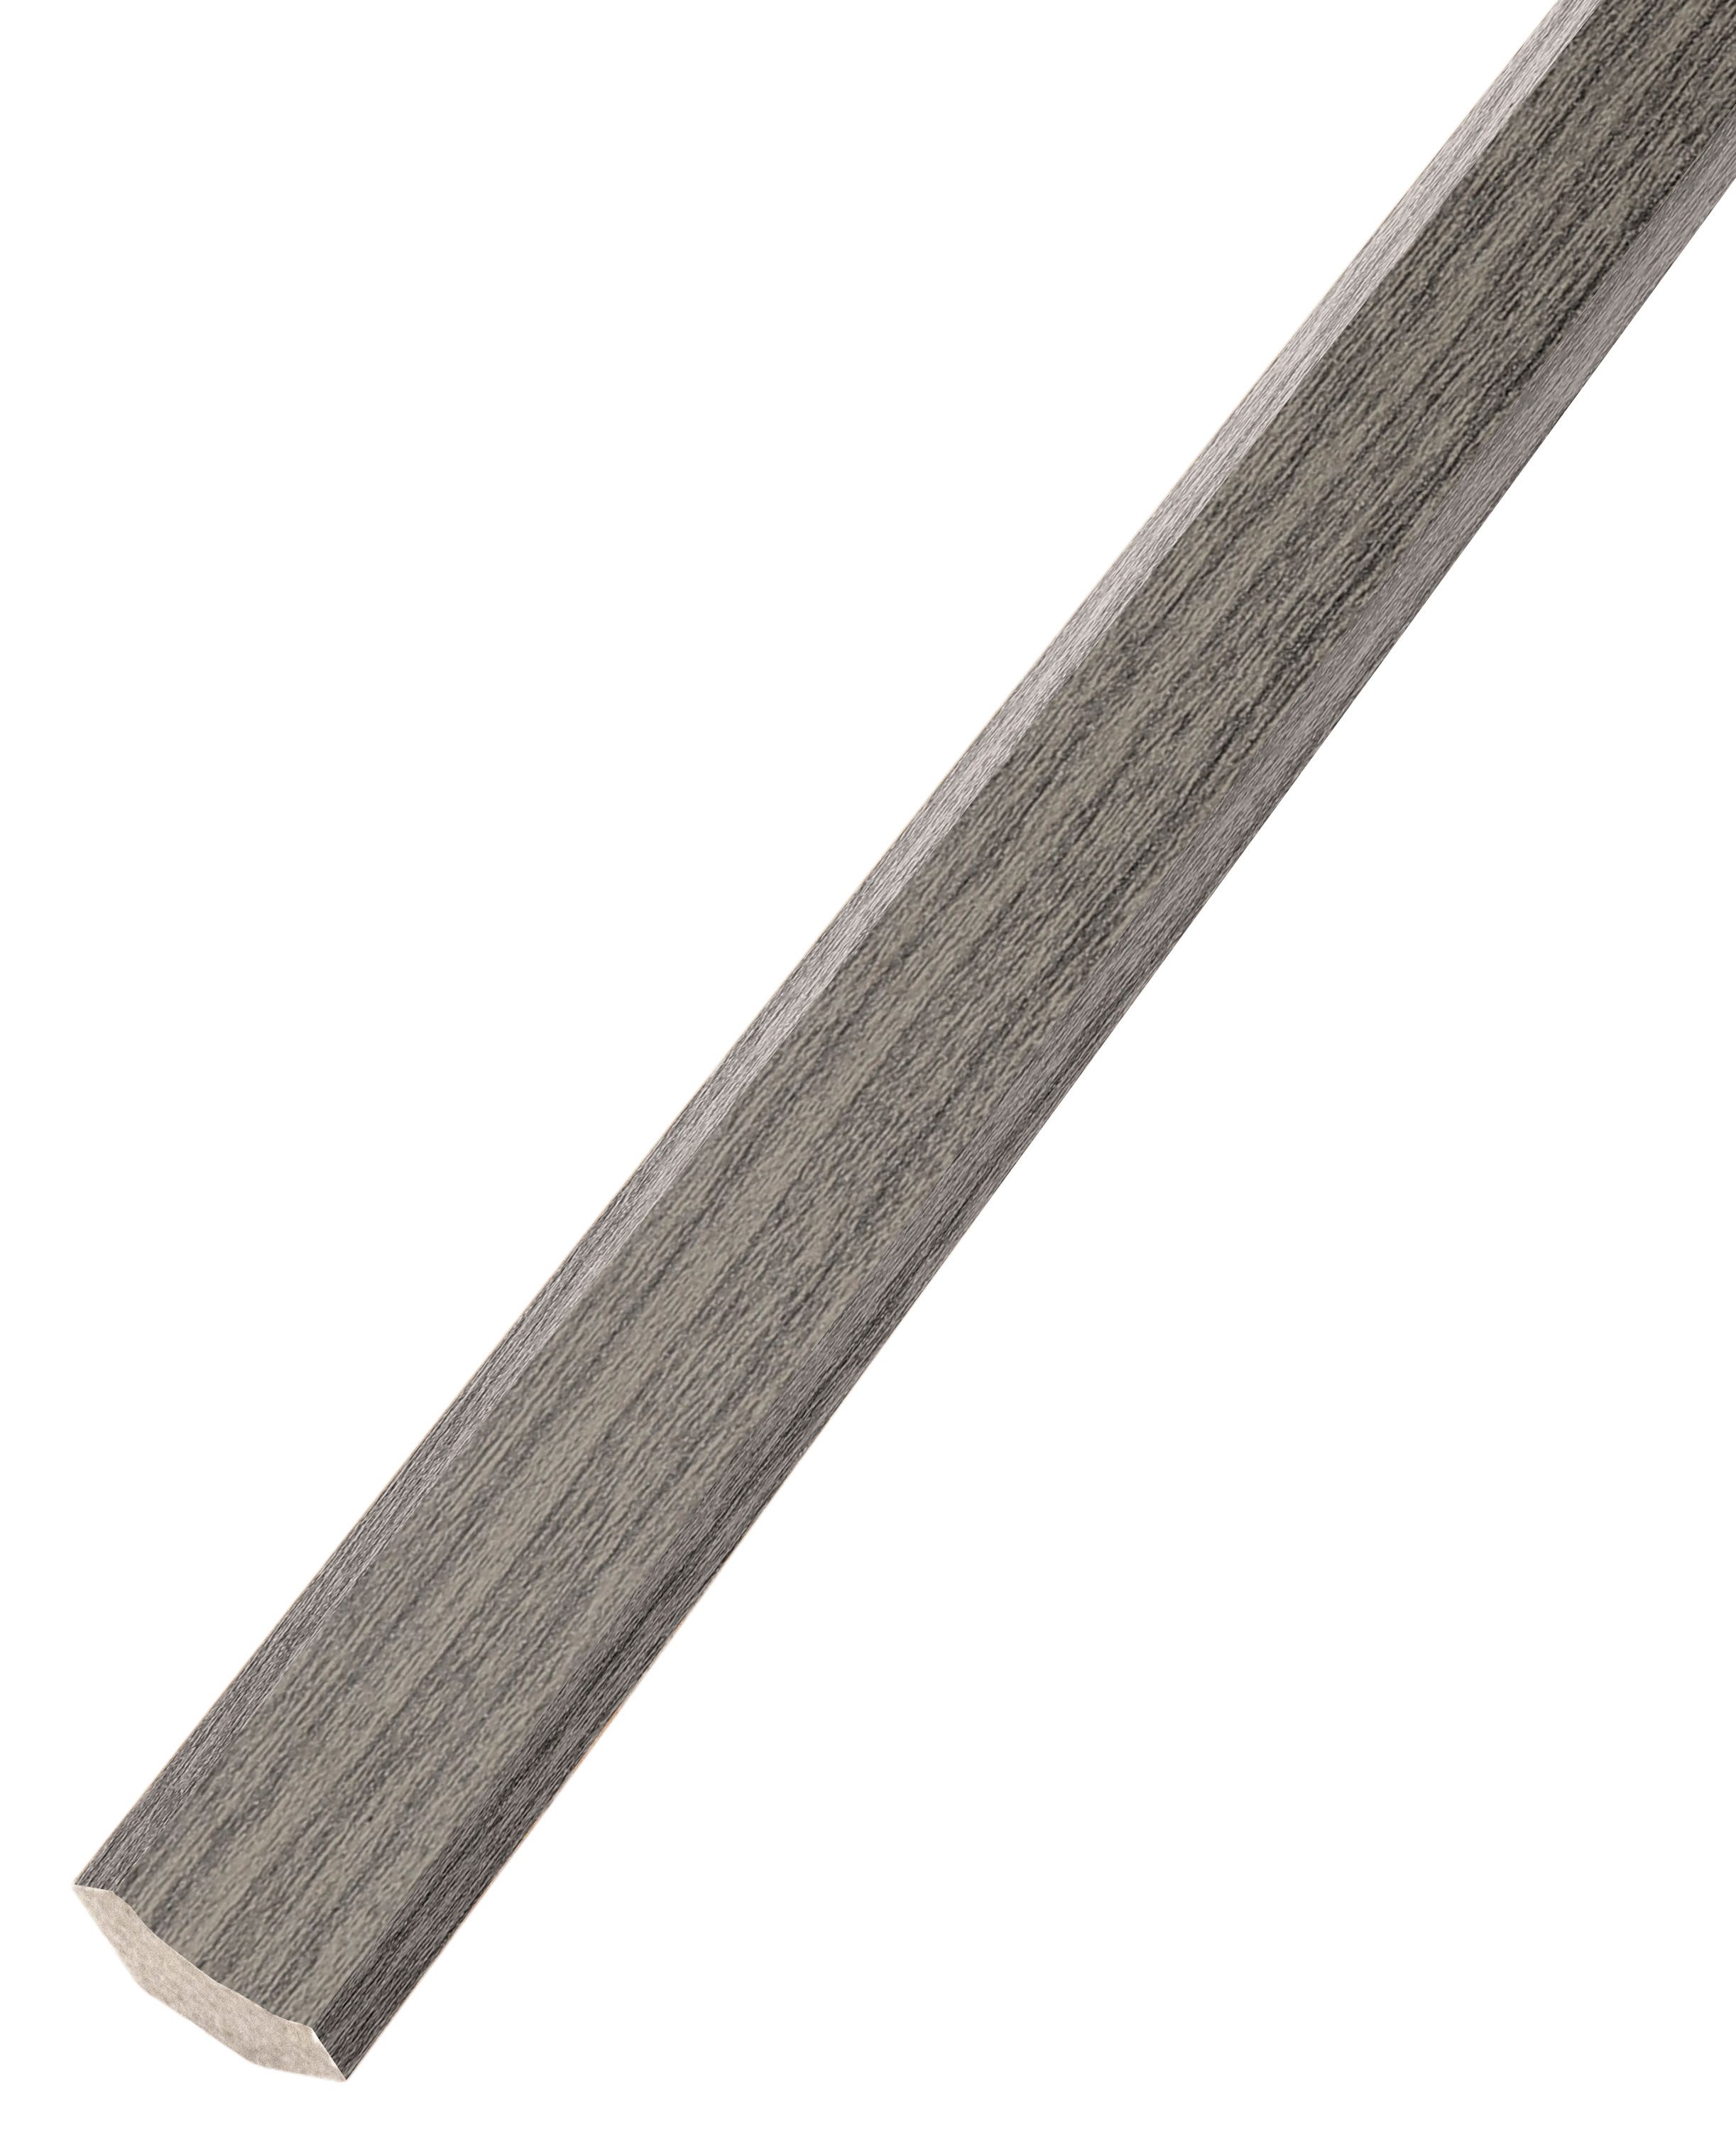 Elderwood / Aramis Medium Grey Oak Flooring Trim